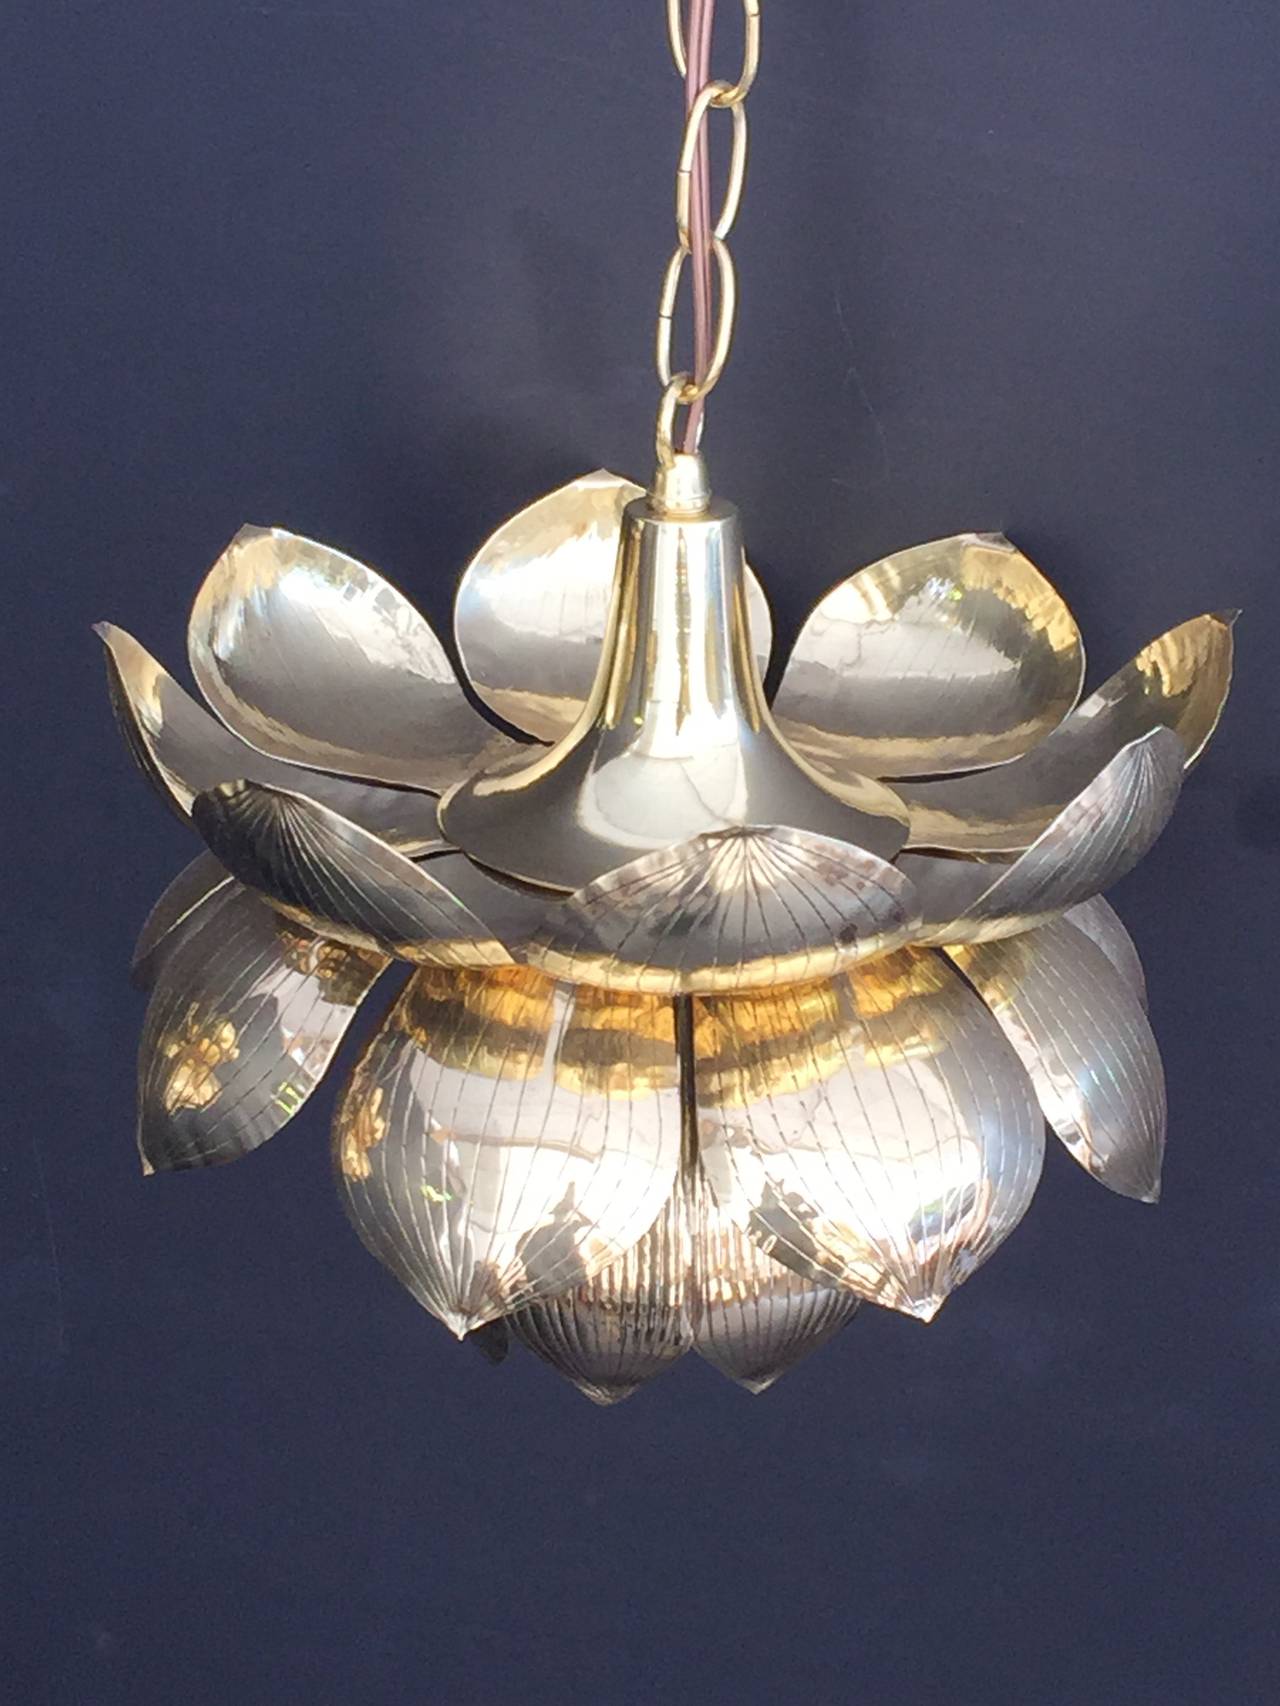 Small brass lotus pendant light by Feldman.